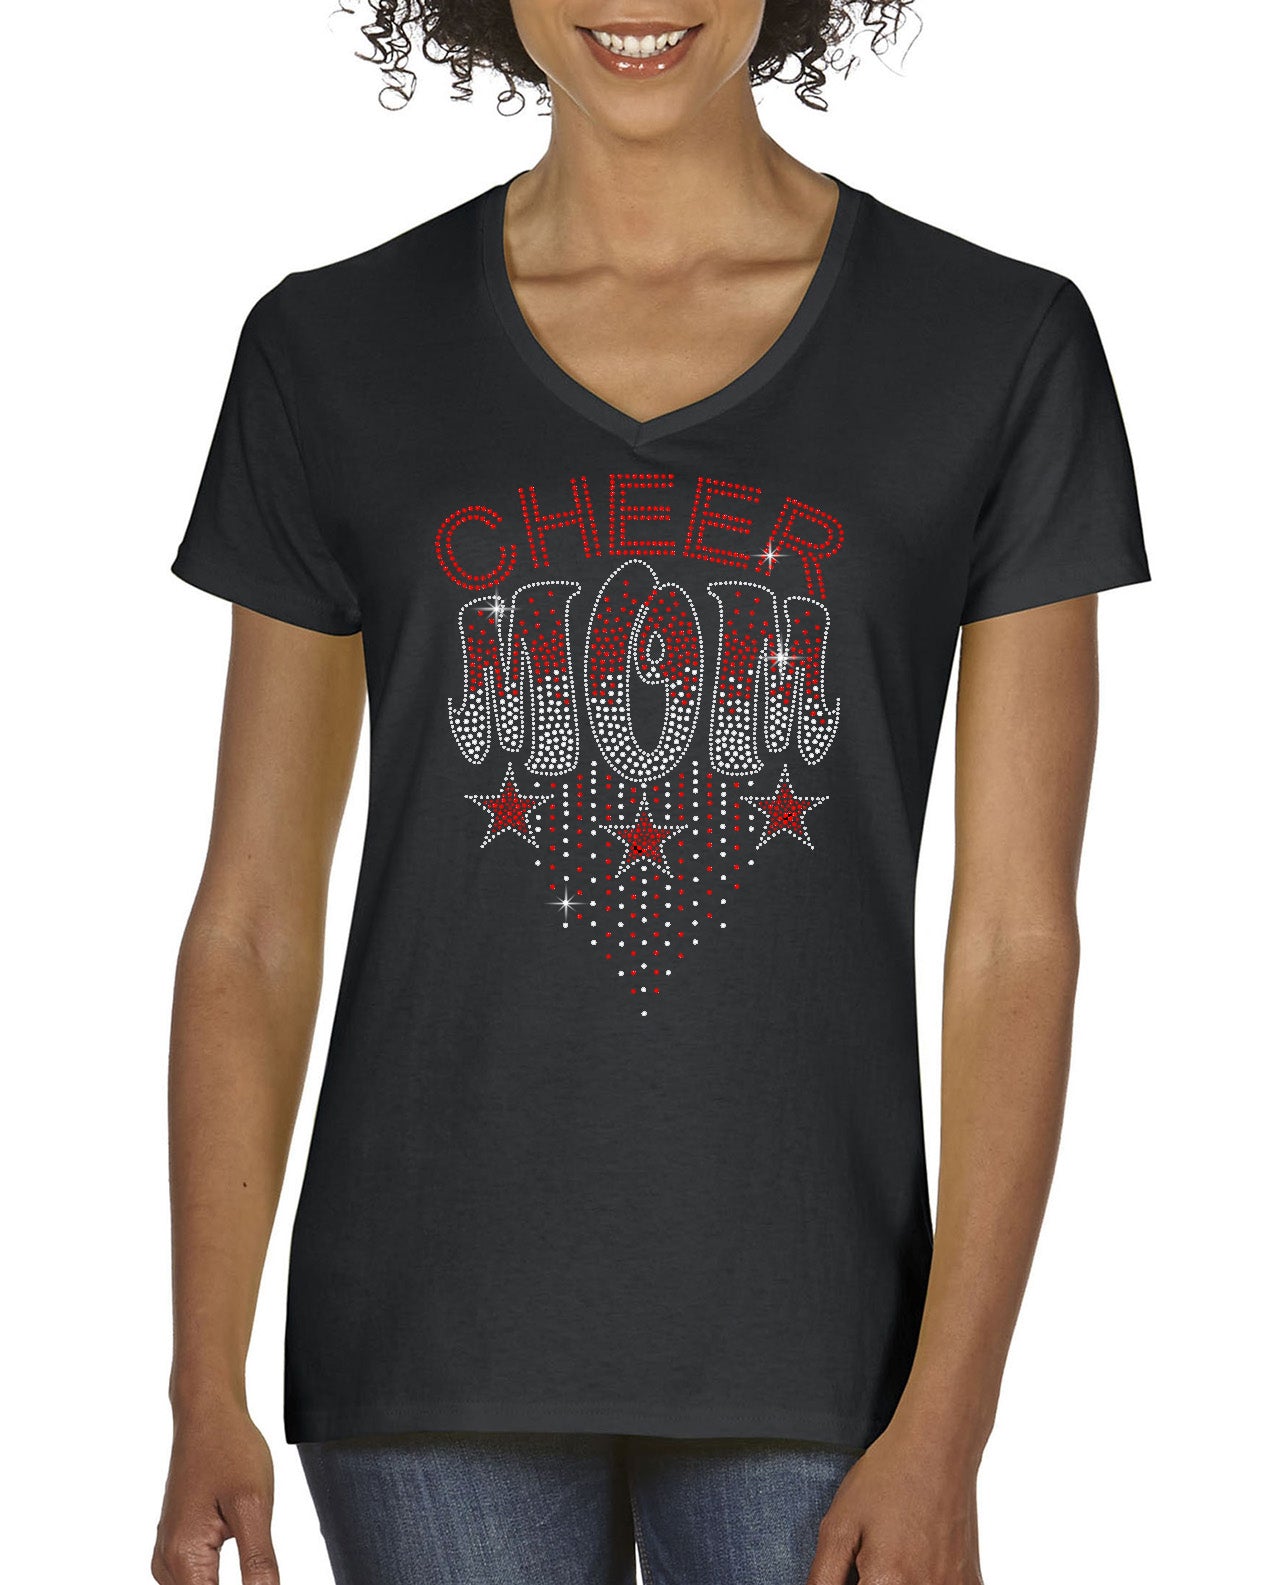 CHEER MOM OMBRE 549 Spangle Bling Design Shirt – StickerDad & ShirtMama